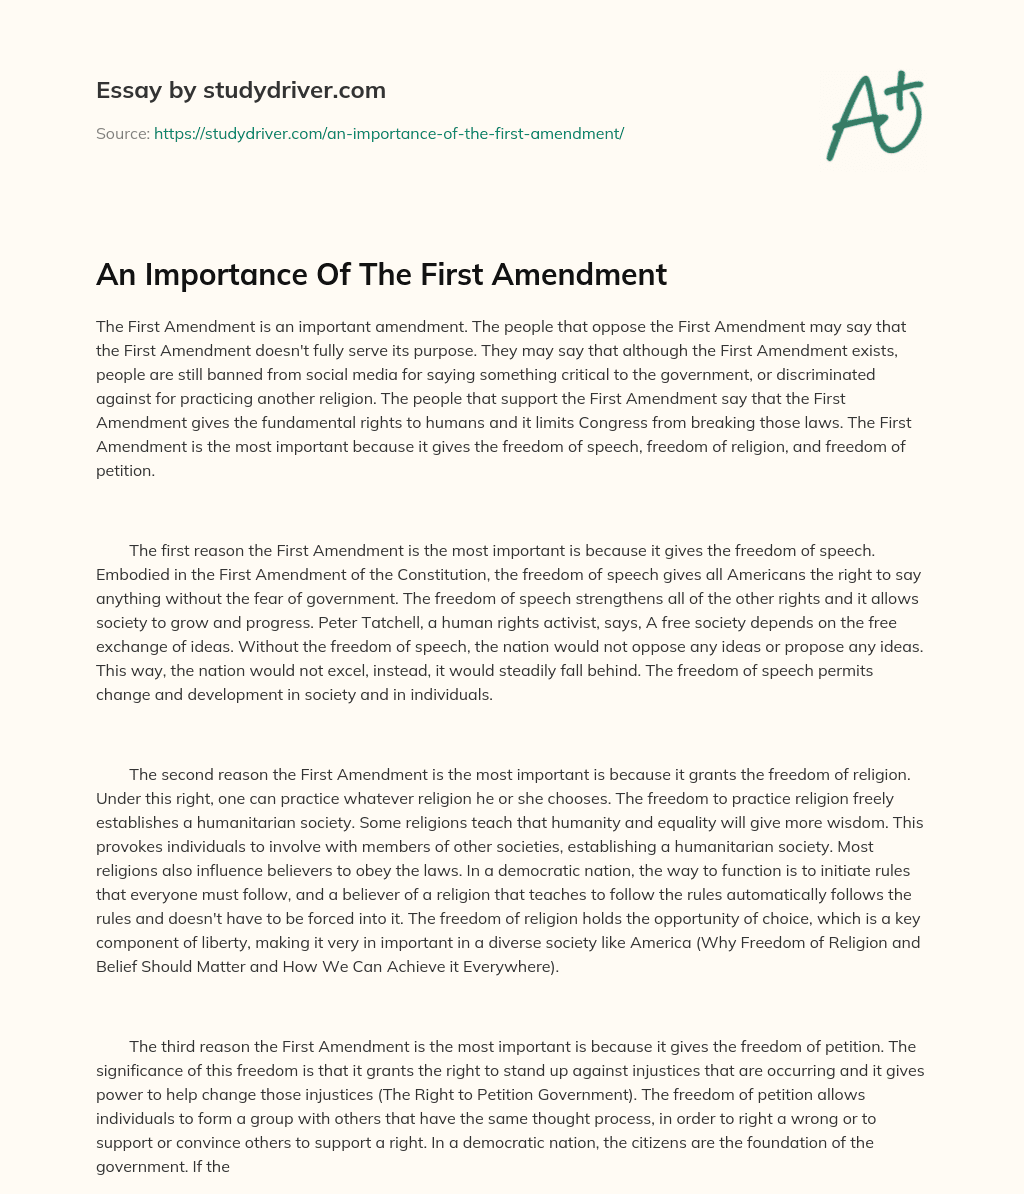 An Importance of the First Amendment essay